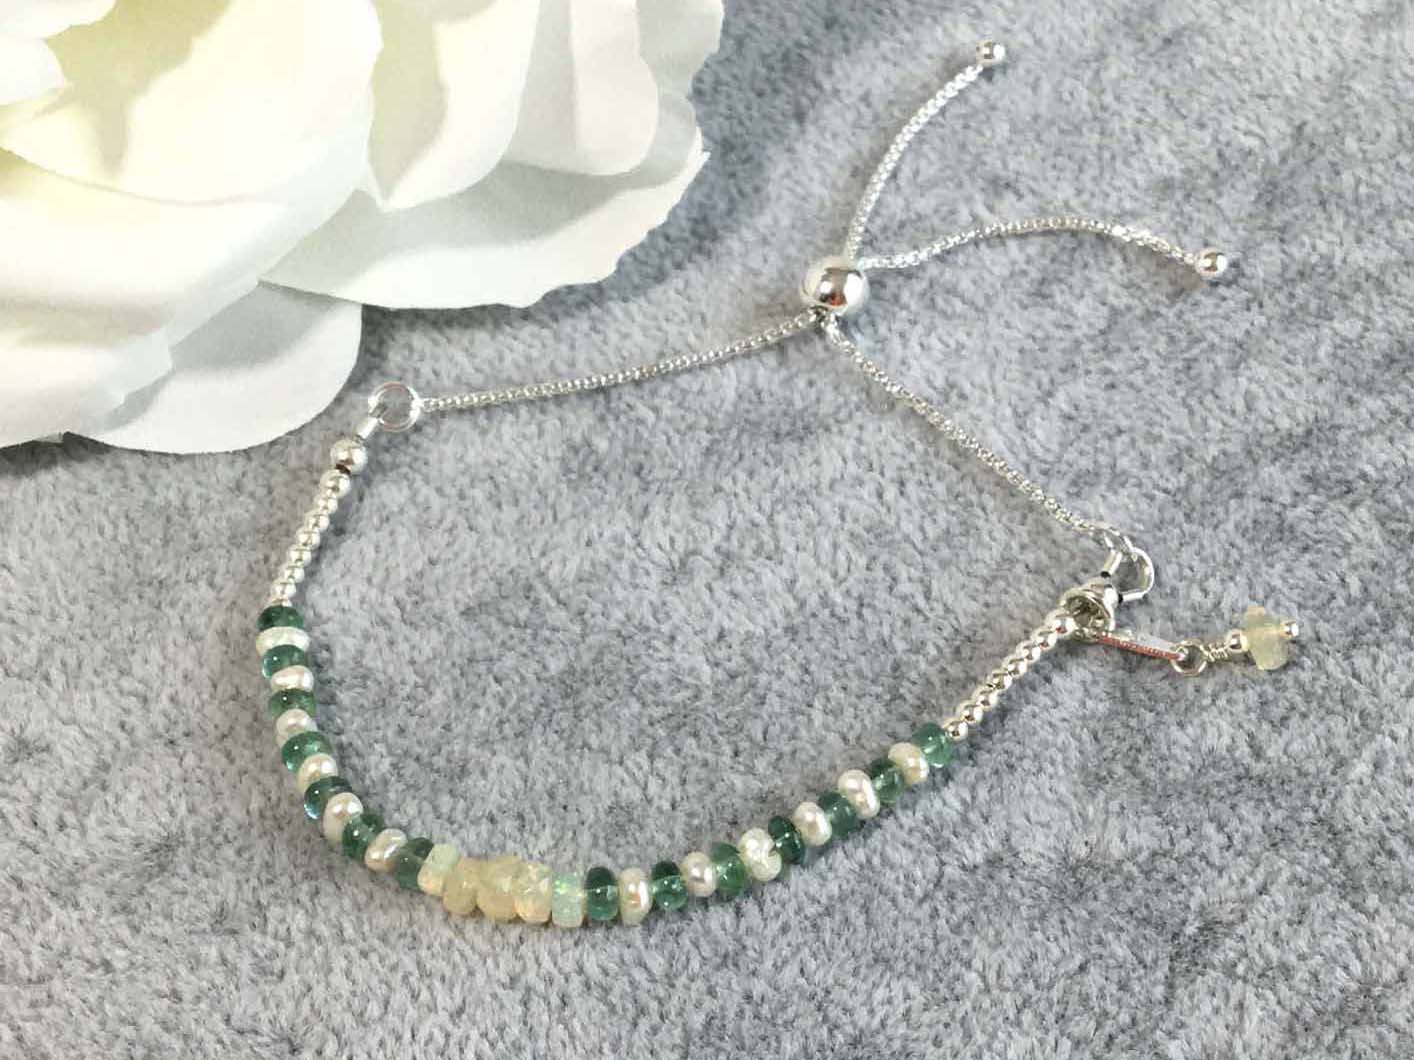 Opal and Emerald Jewellery by Linda sterling silver slider bracelet